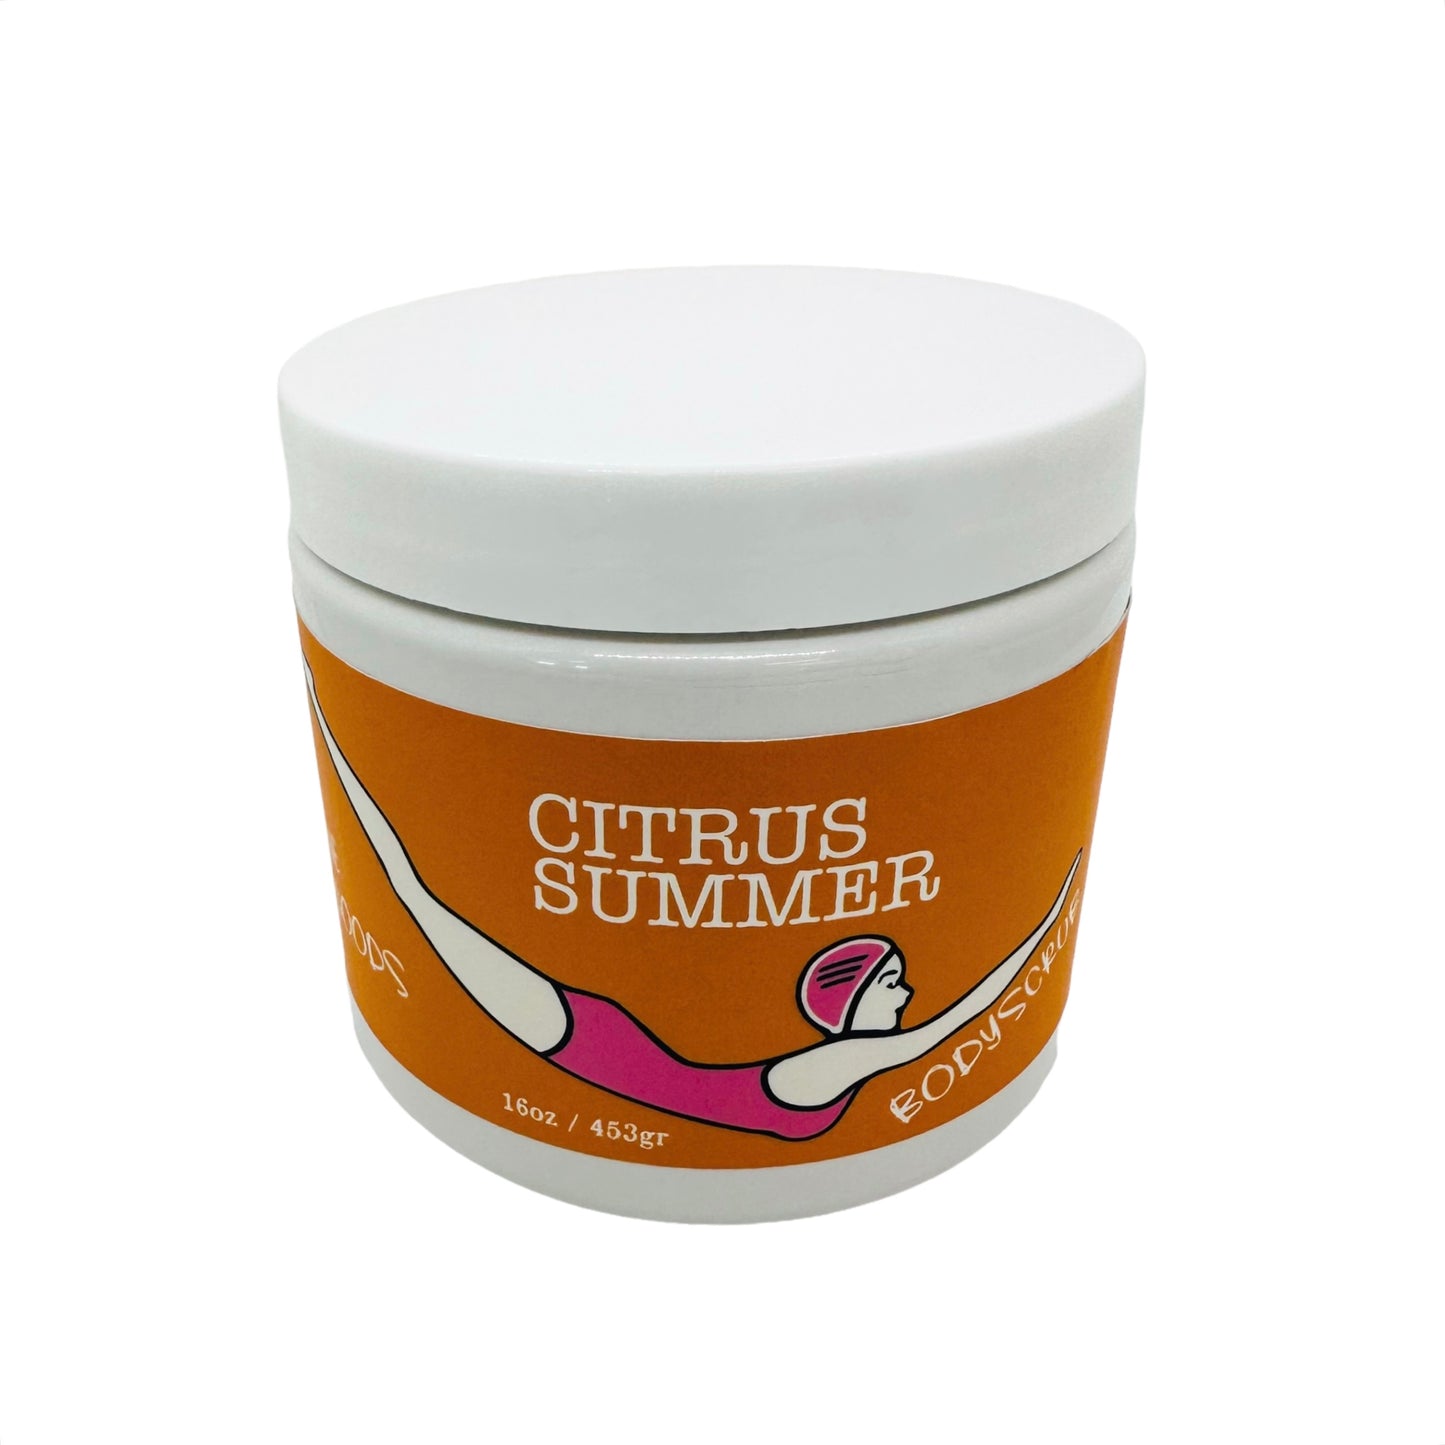 Citrus Summer Body scrub